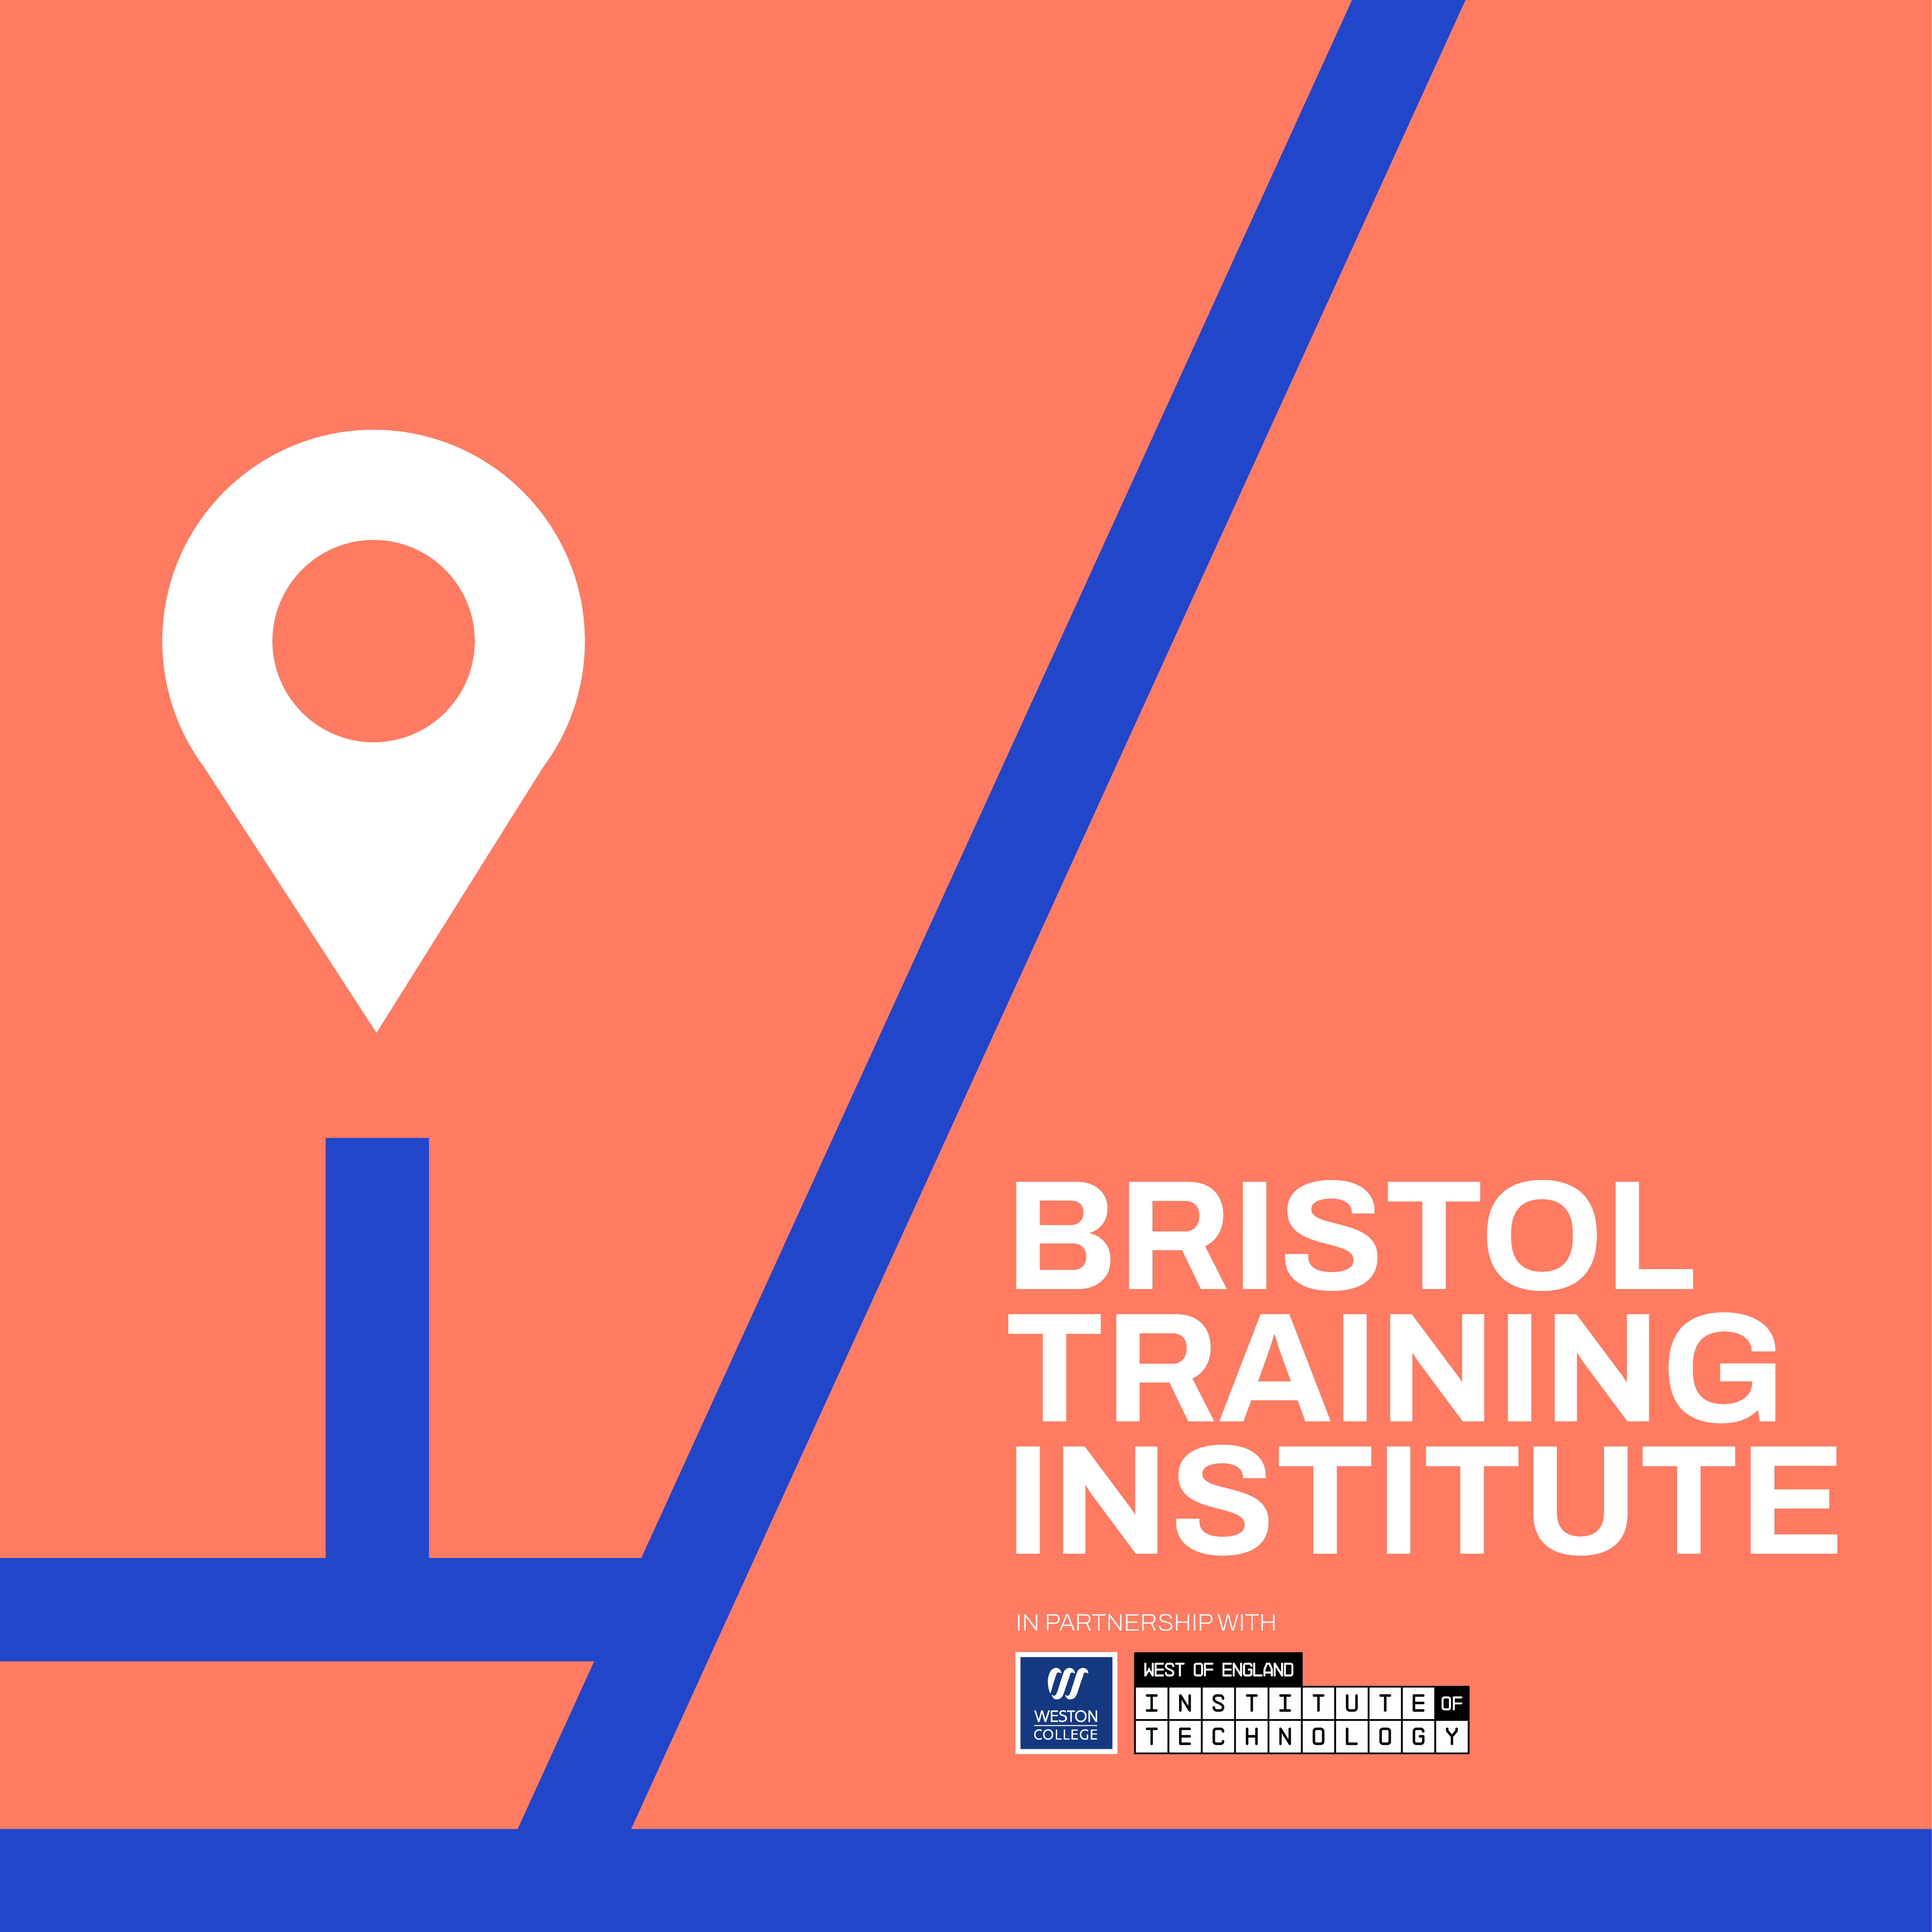 Bristol Institute of technology